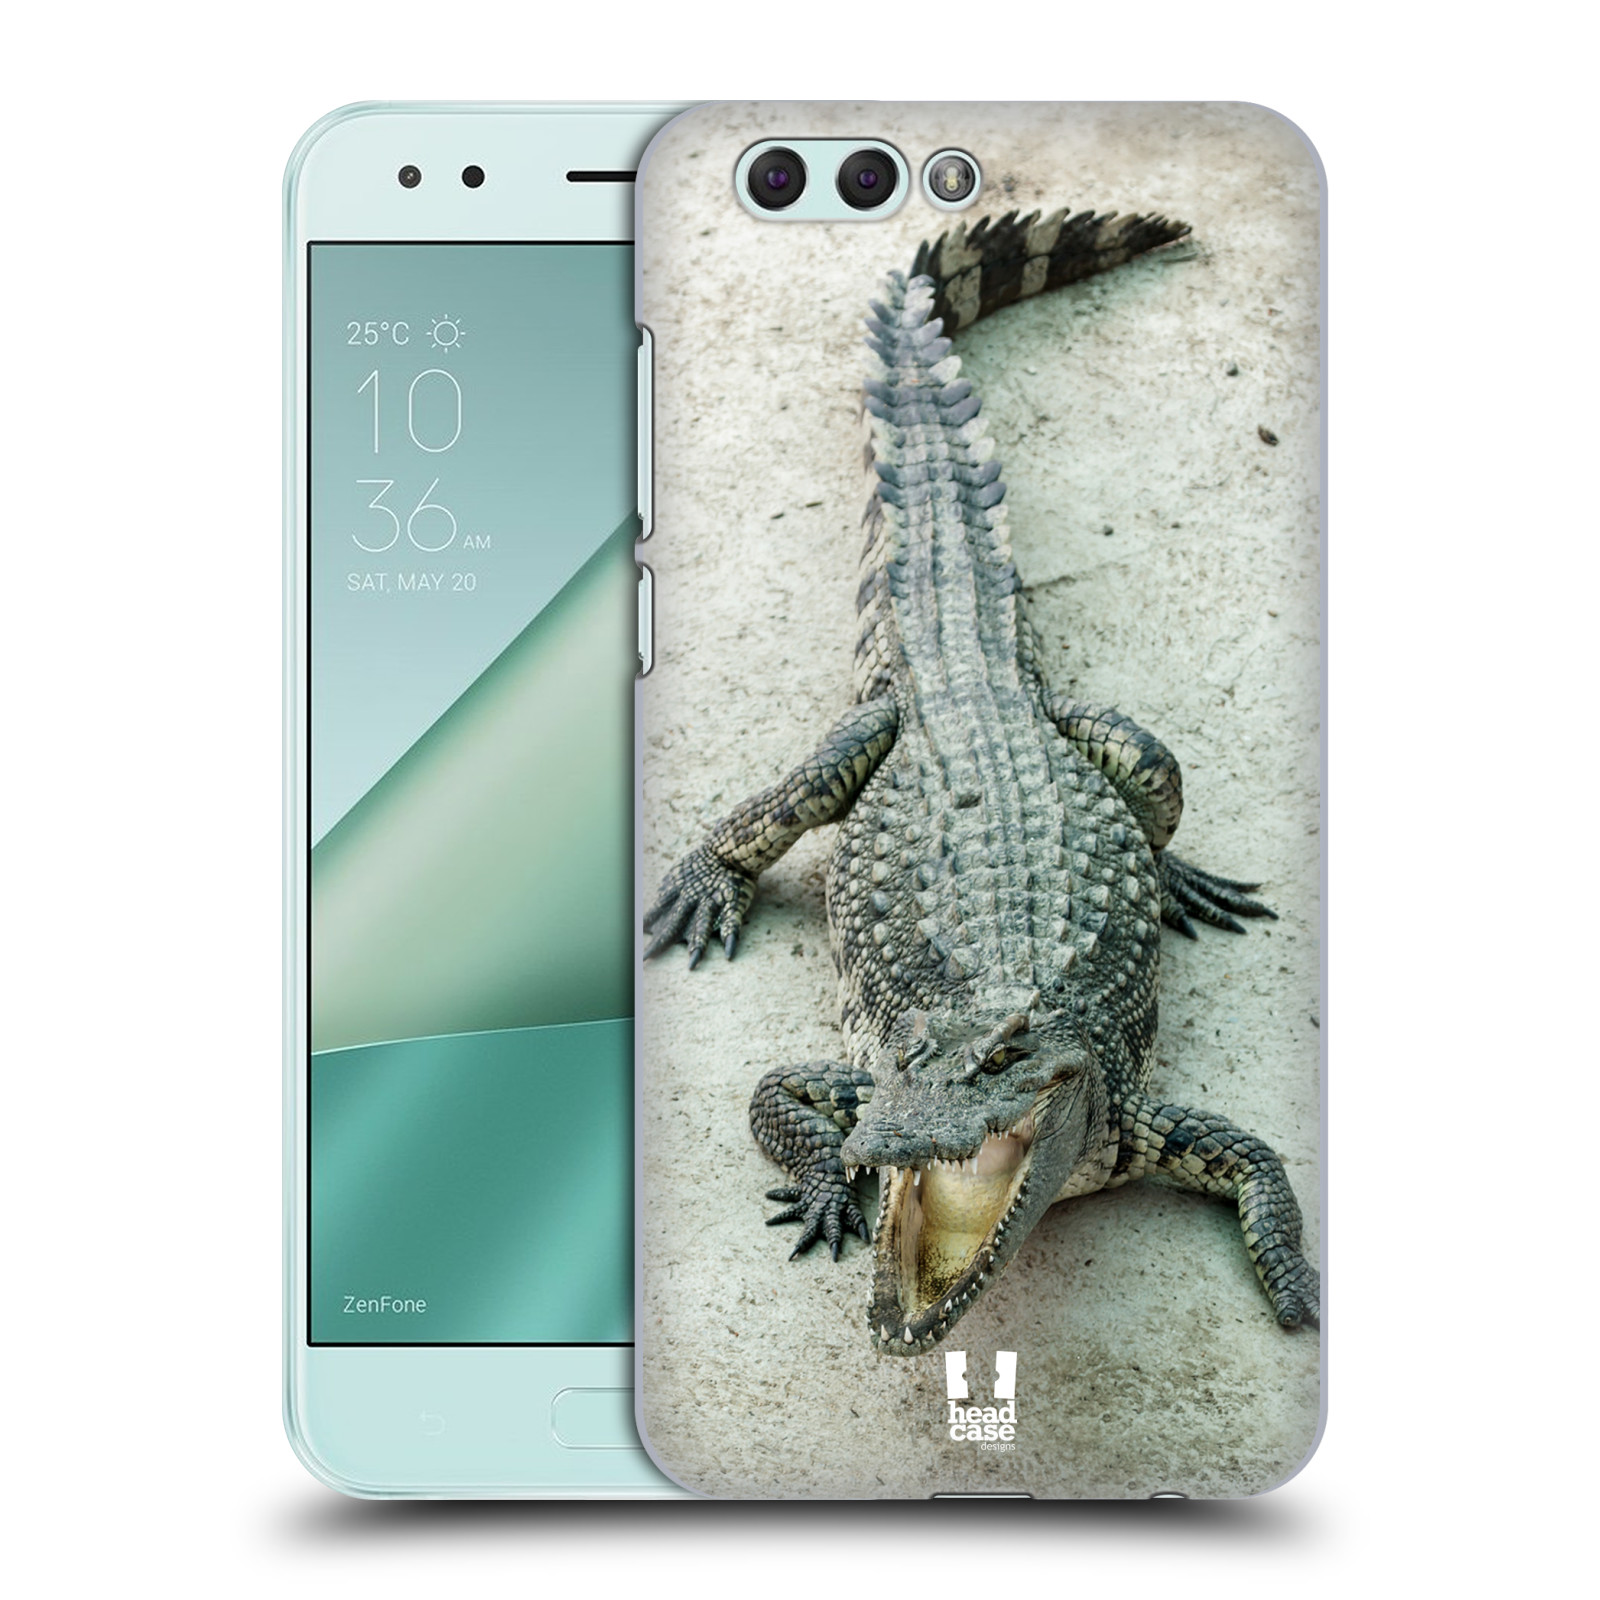 HEAD CASE plastový obal na mobil Asus Zenfone 4 ZE554KL vzor Divočina, Divoký život a zvířata foto KROKODÝL, KAJMAN